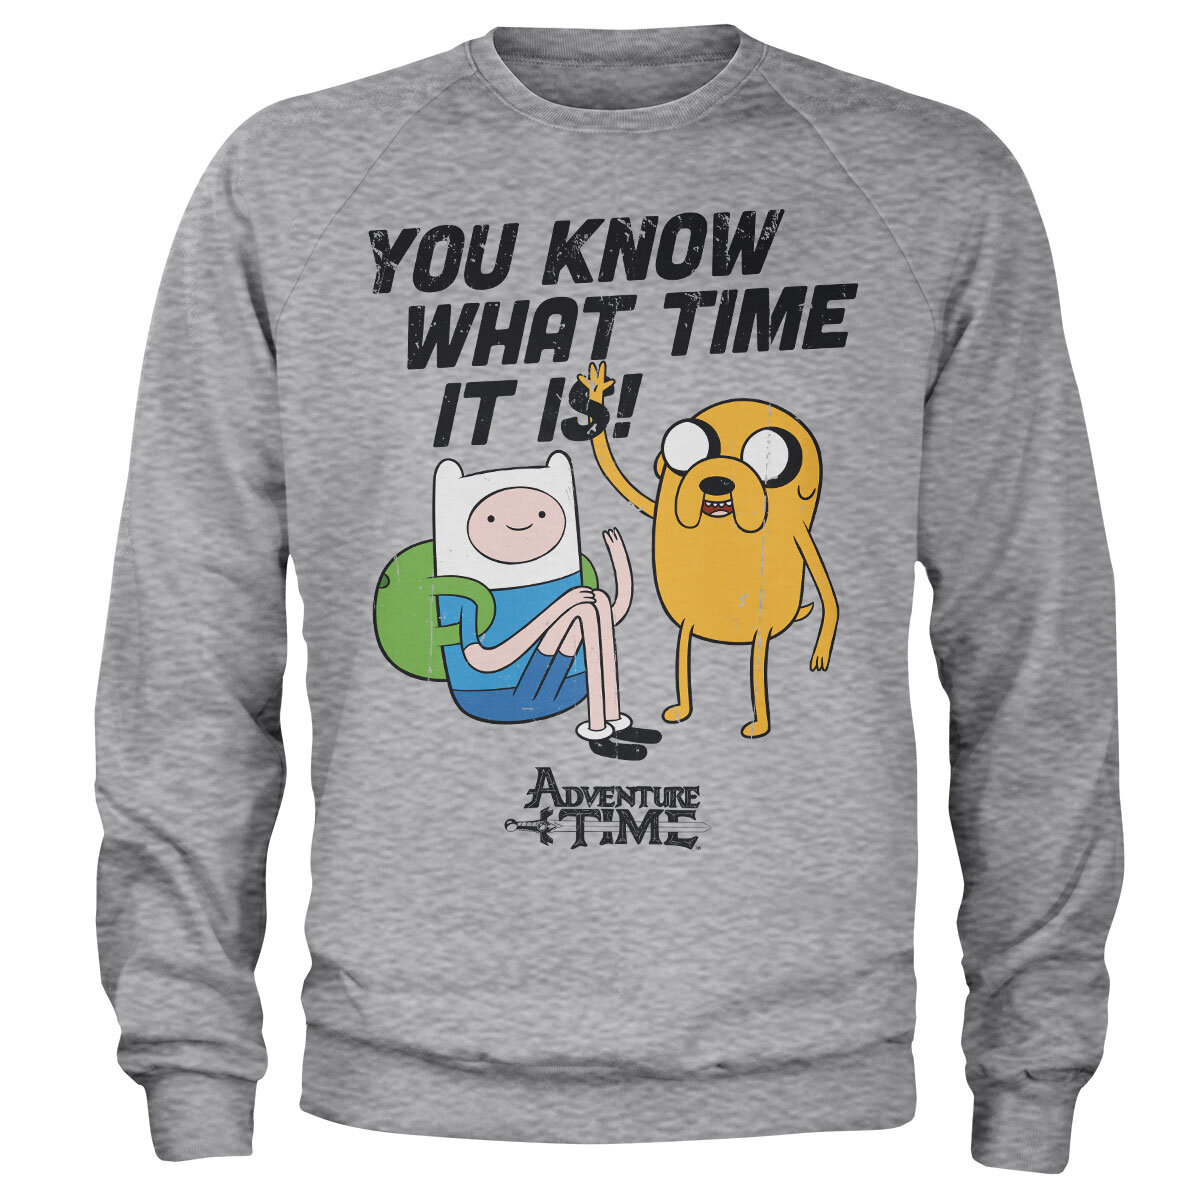 It's Adventure Time Sweatshirt